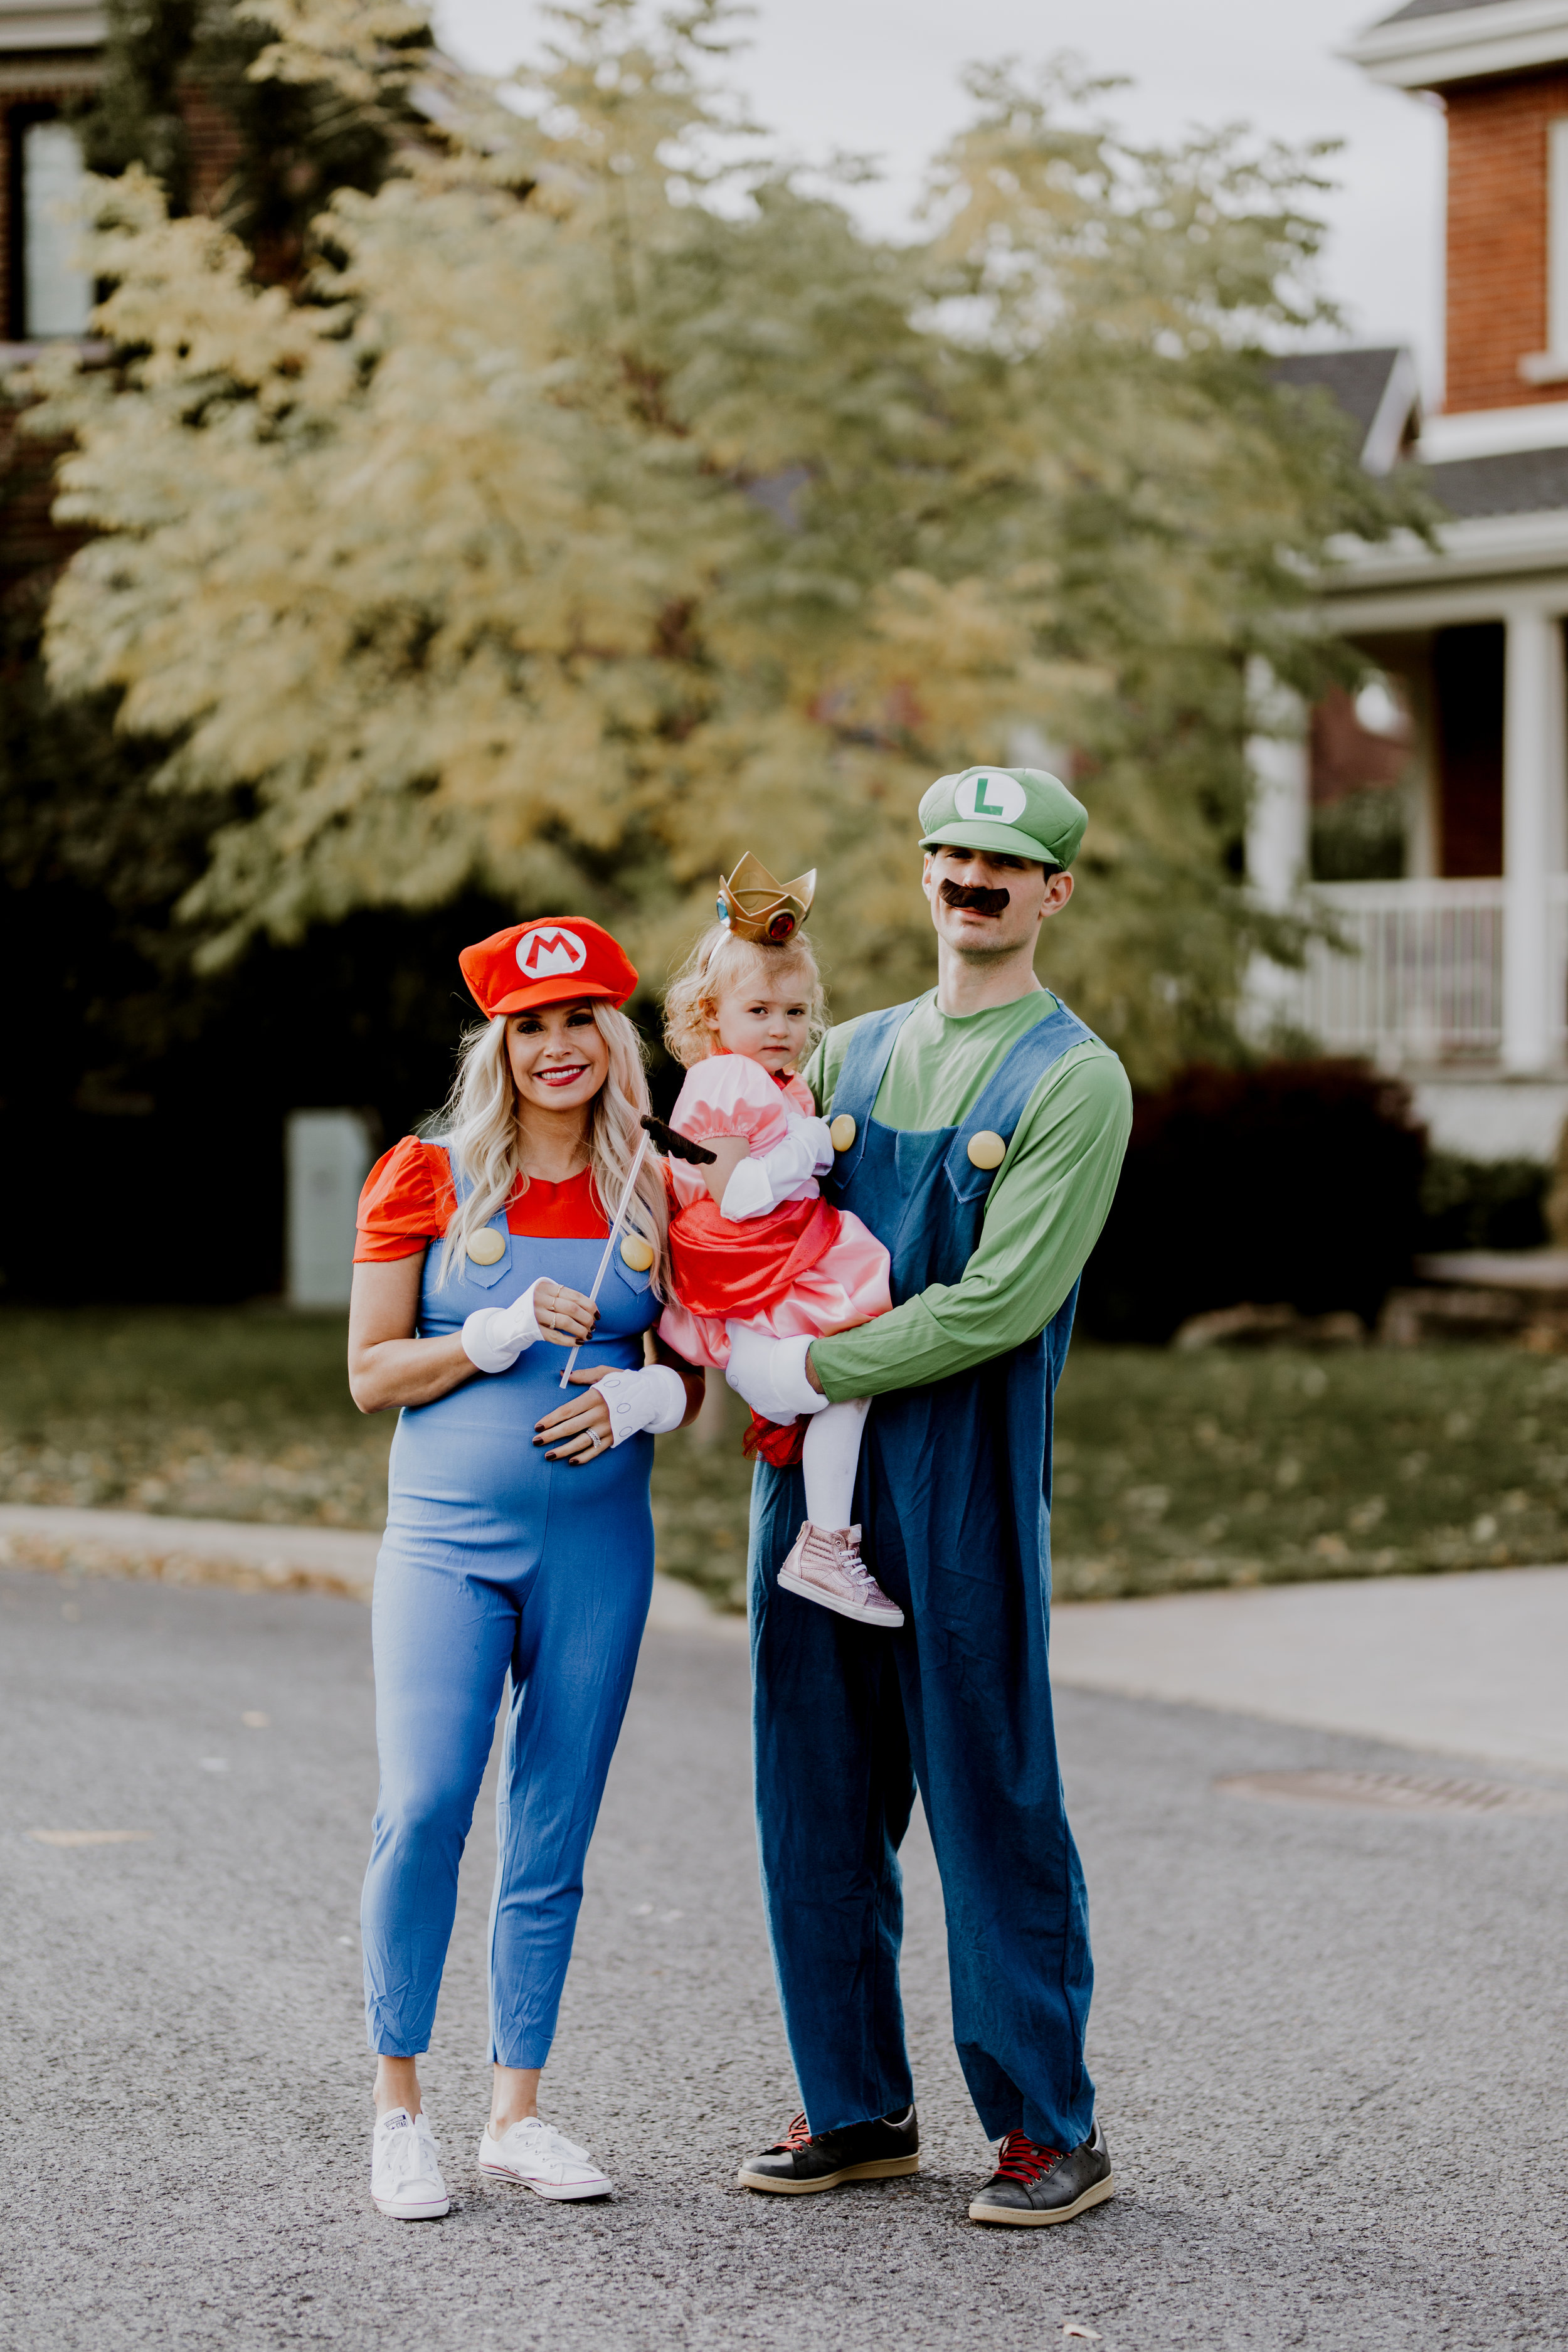 Happy Halloween from Mario, Luigi and Princess Peach — By Angela